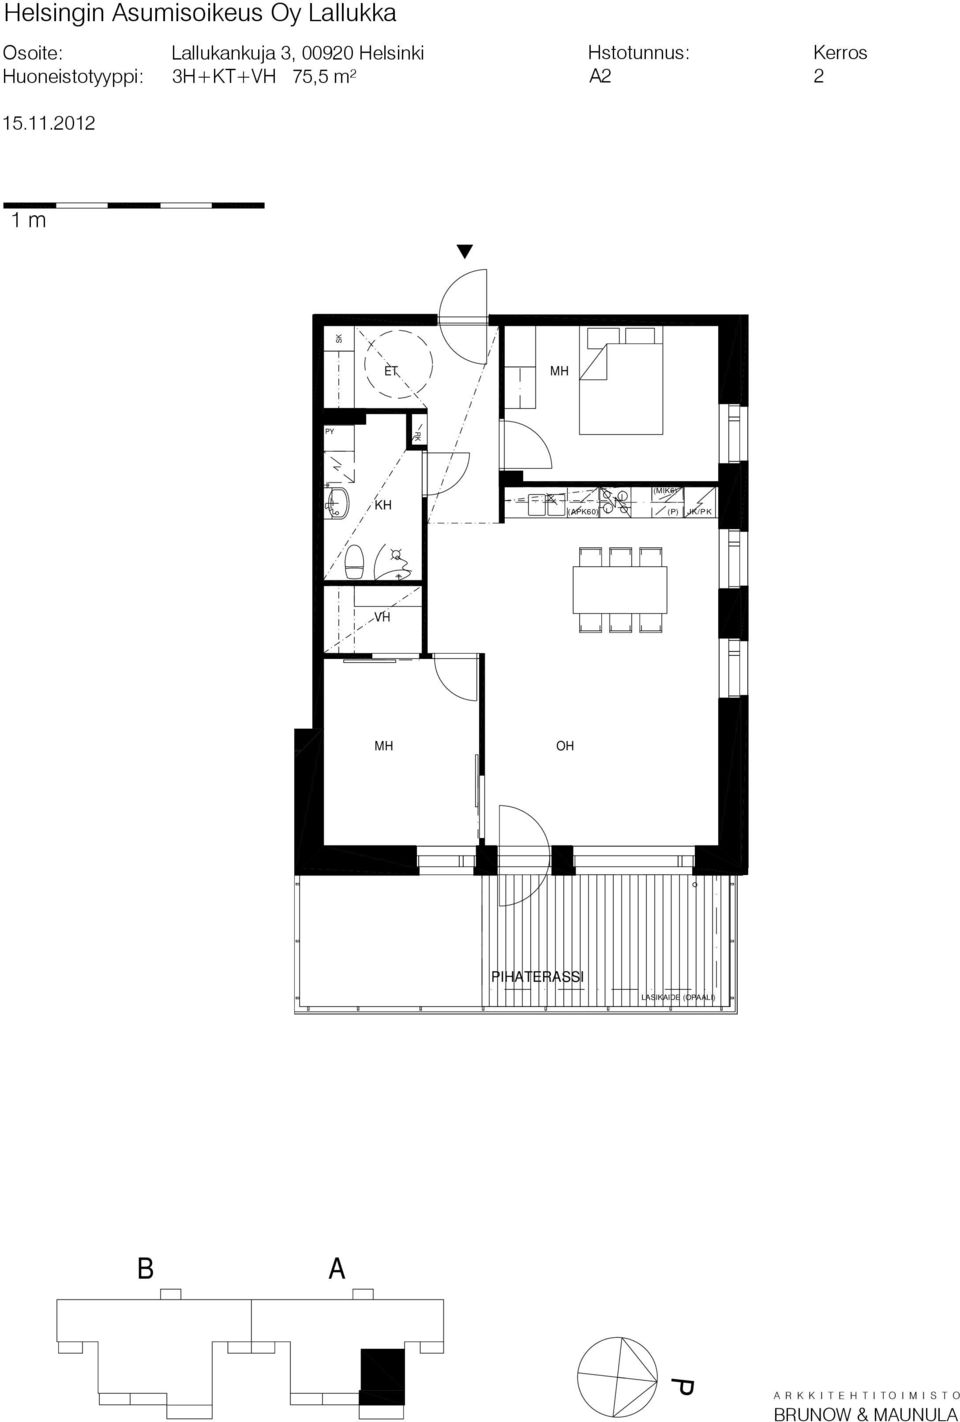 Huoneistotyyppi: 3H+KT+ 75,5 m² 2 2 (K60)